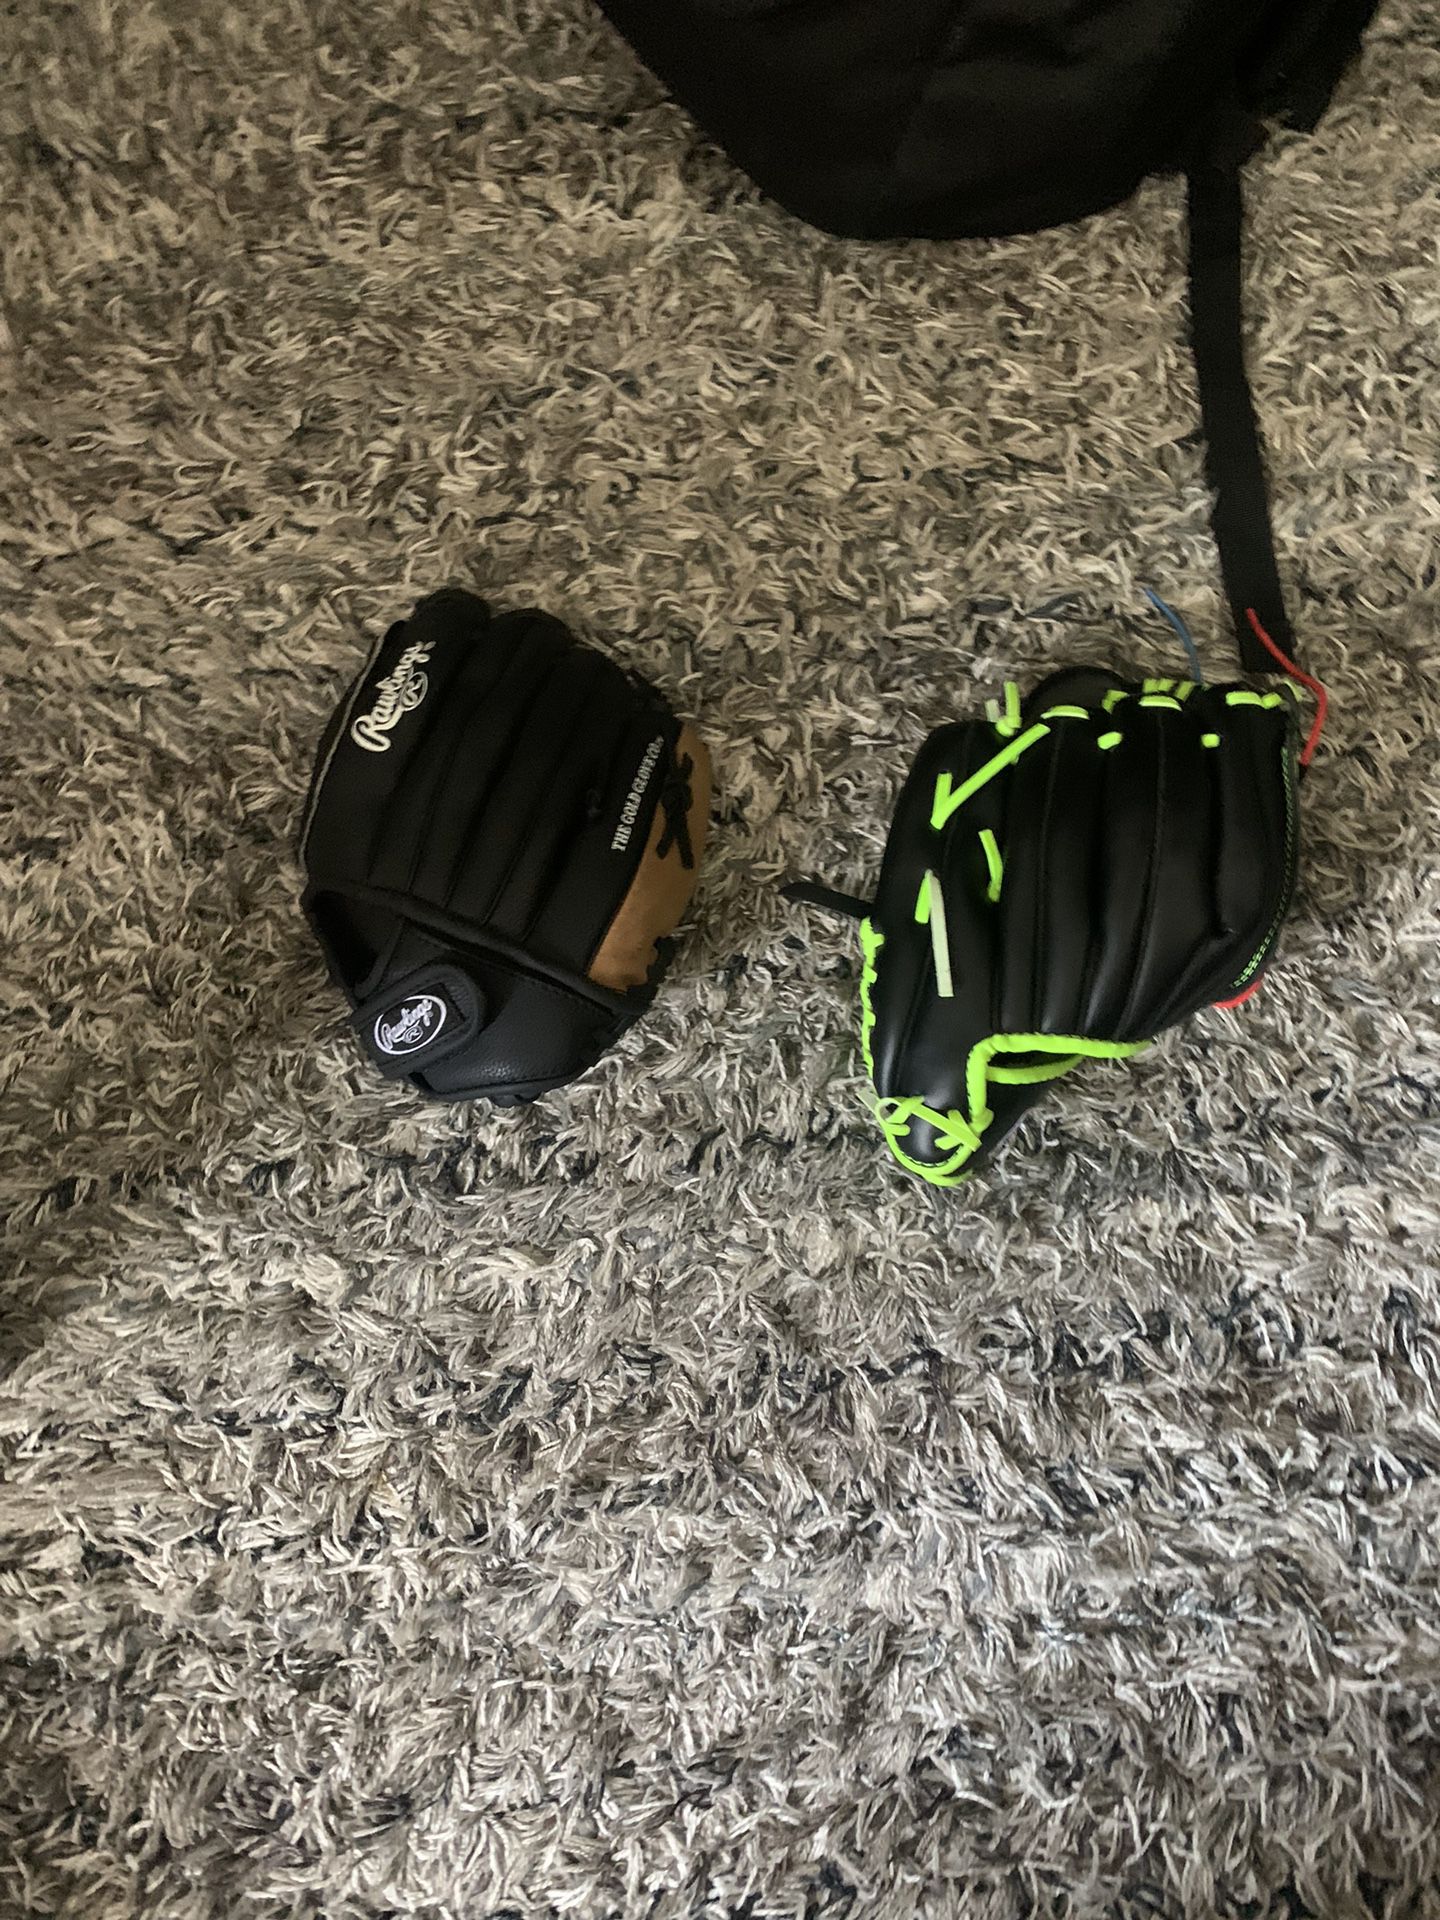 Baseball Gloves and Baseball 